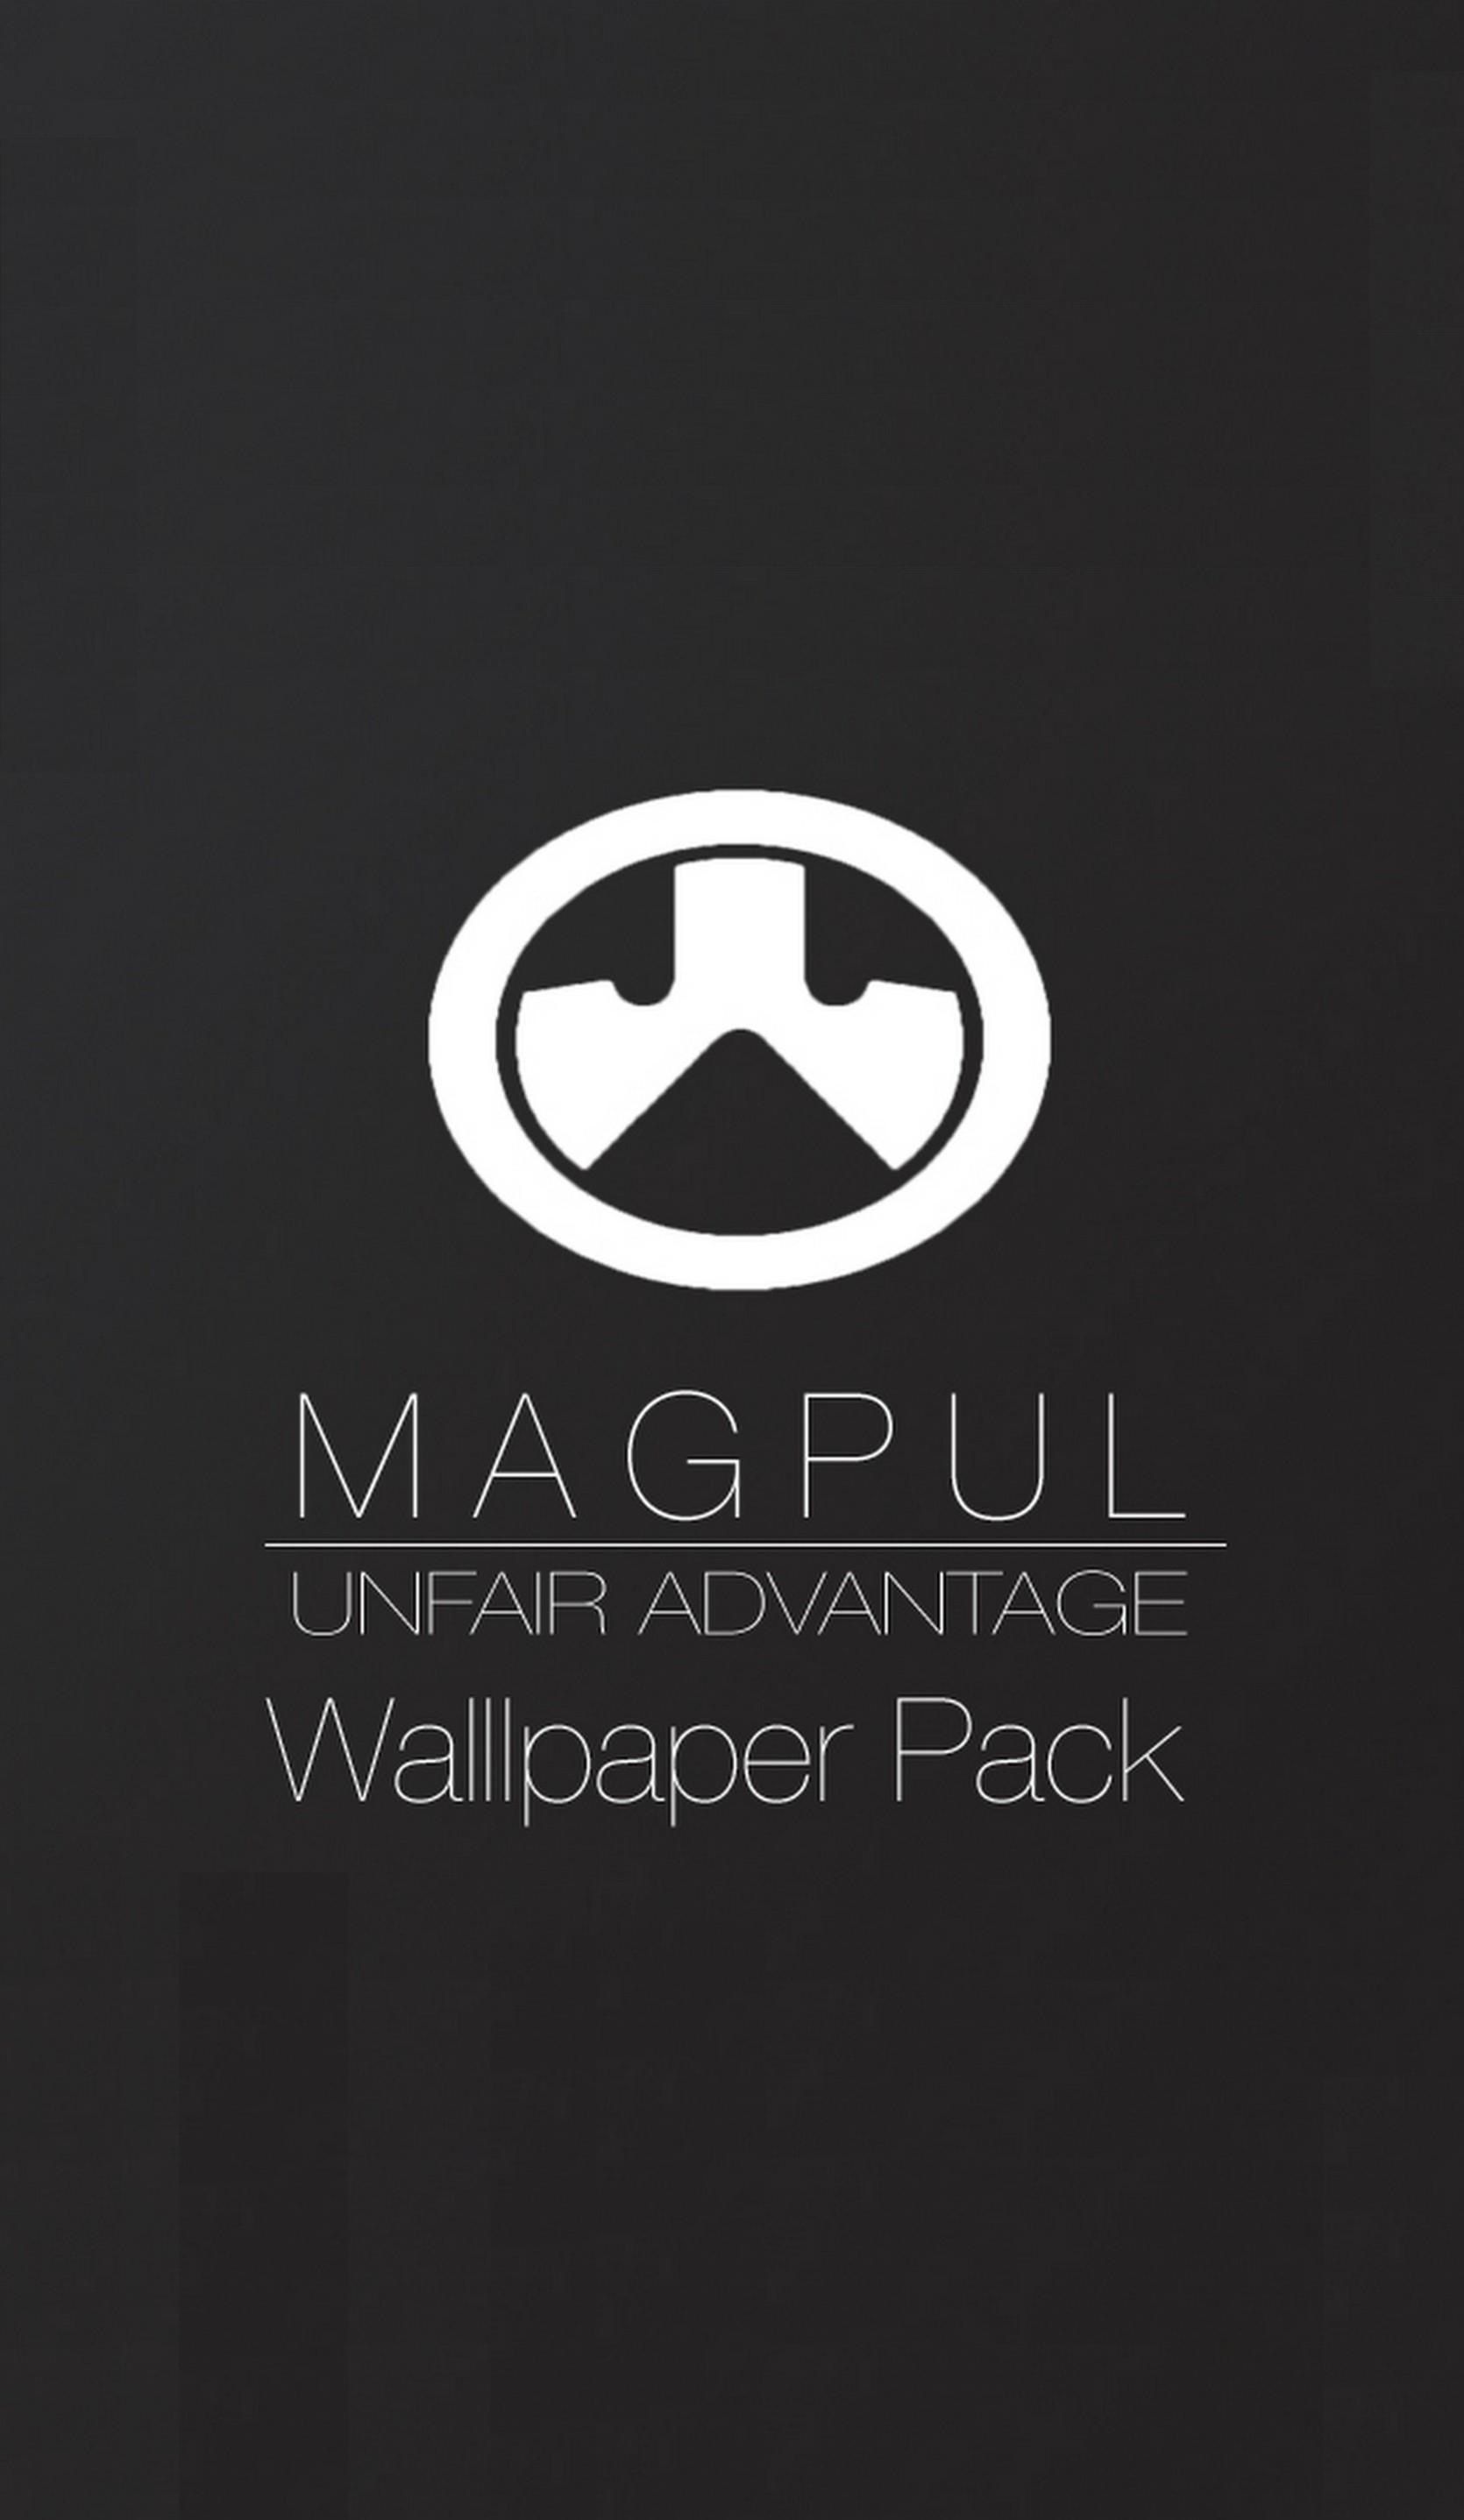 Magpul Iphone Wallpaper Magpul Iphone Wallpaper | Free Quotes